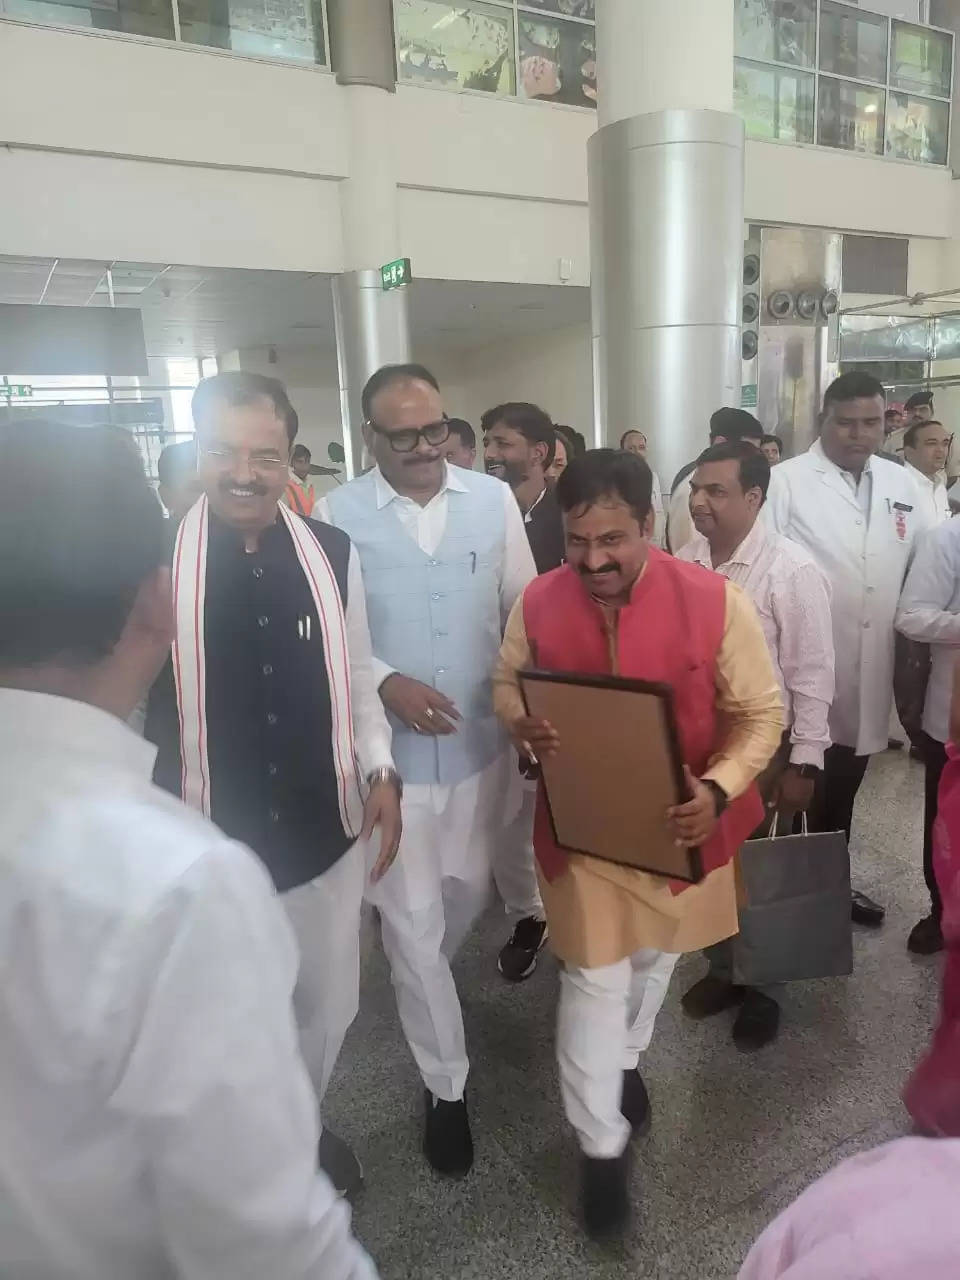  वाराणसी एयरपोर्ट पहुंचे उपमुख्यमंत्री केशव प्रसाद मौर्य व ब्रजेश पाठक, भाजपा नेताओं ने किया स्वागत